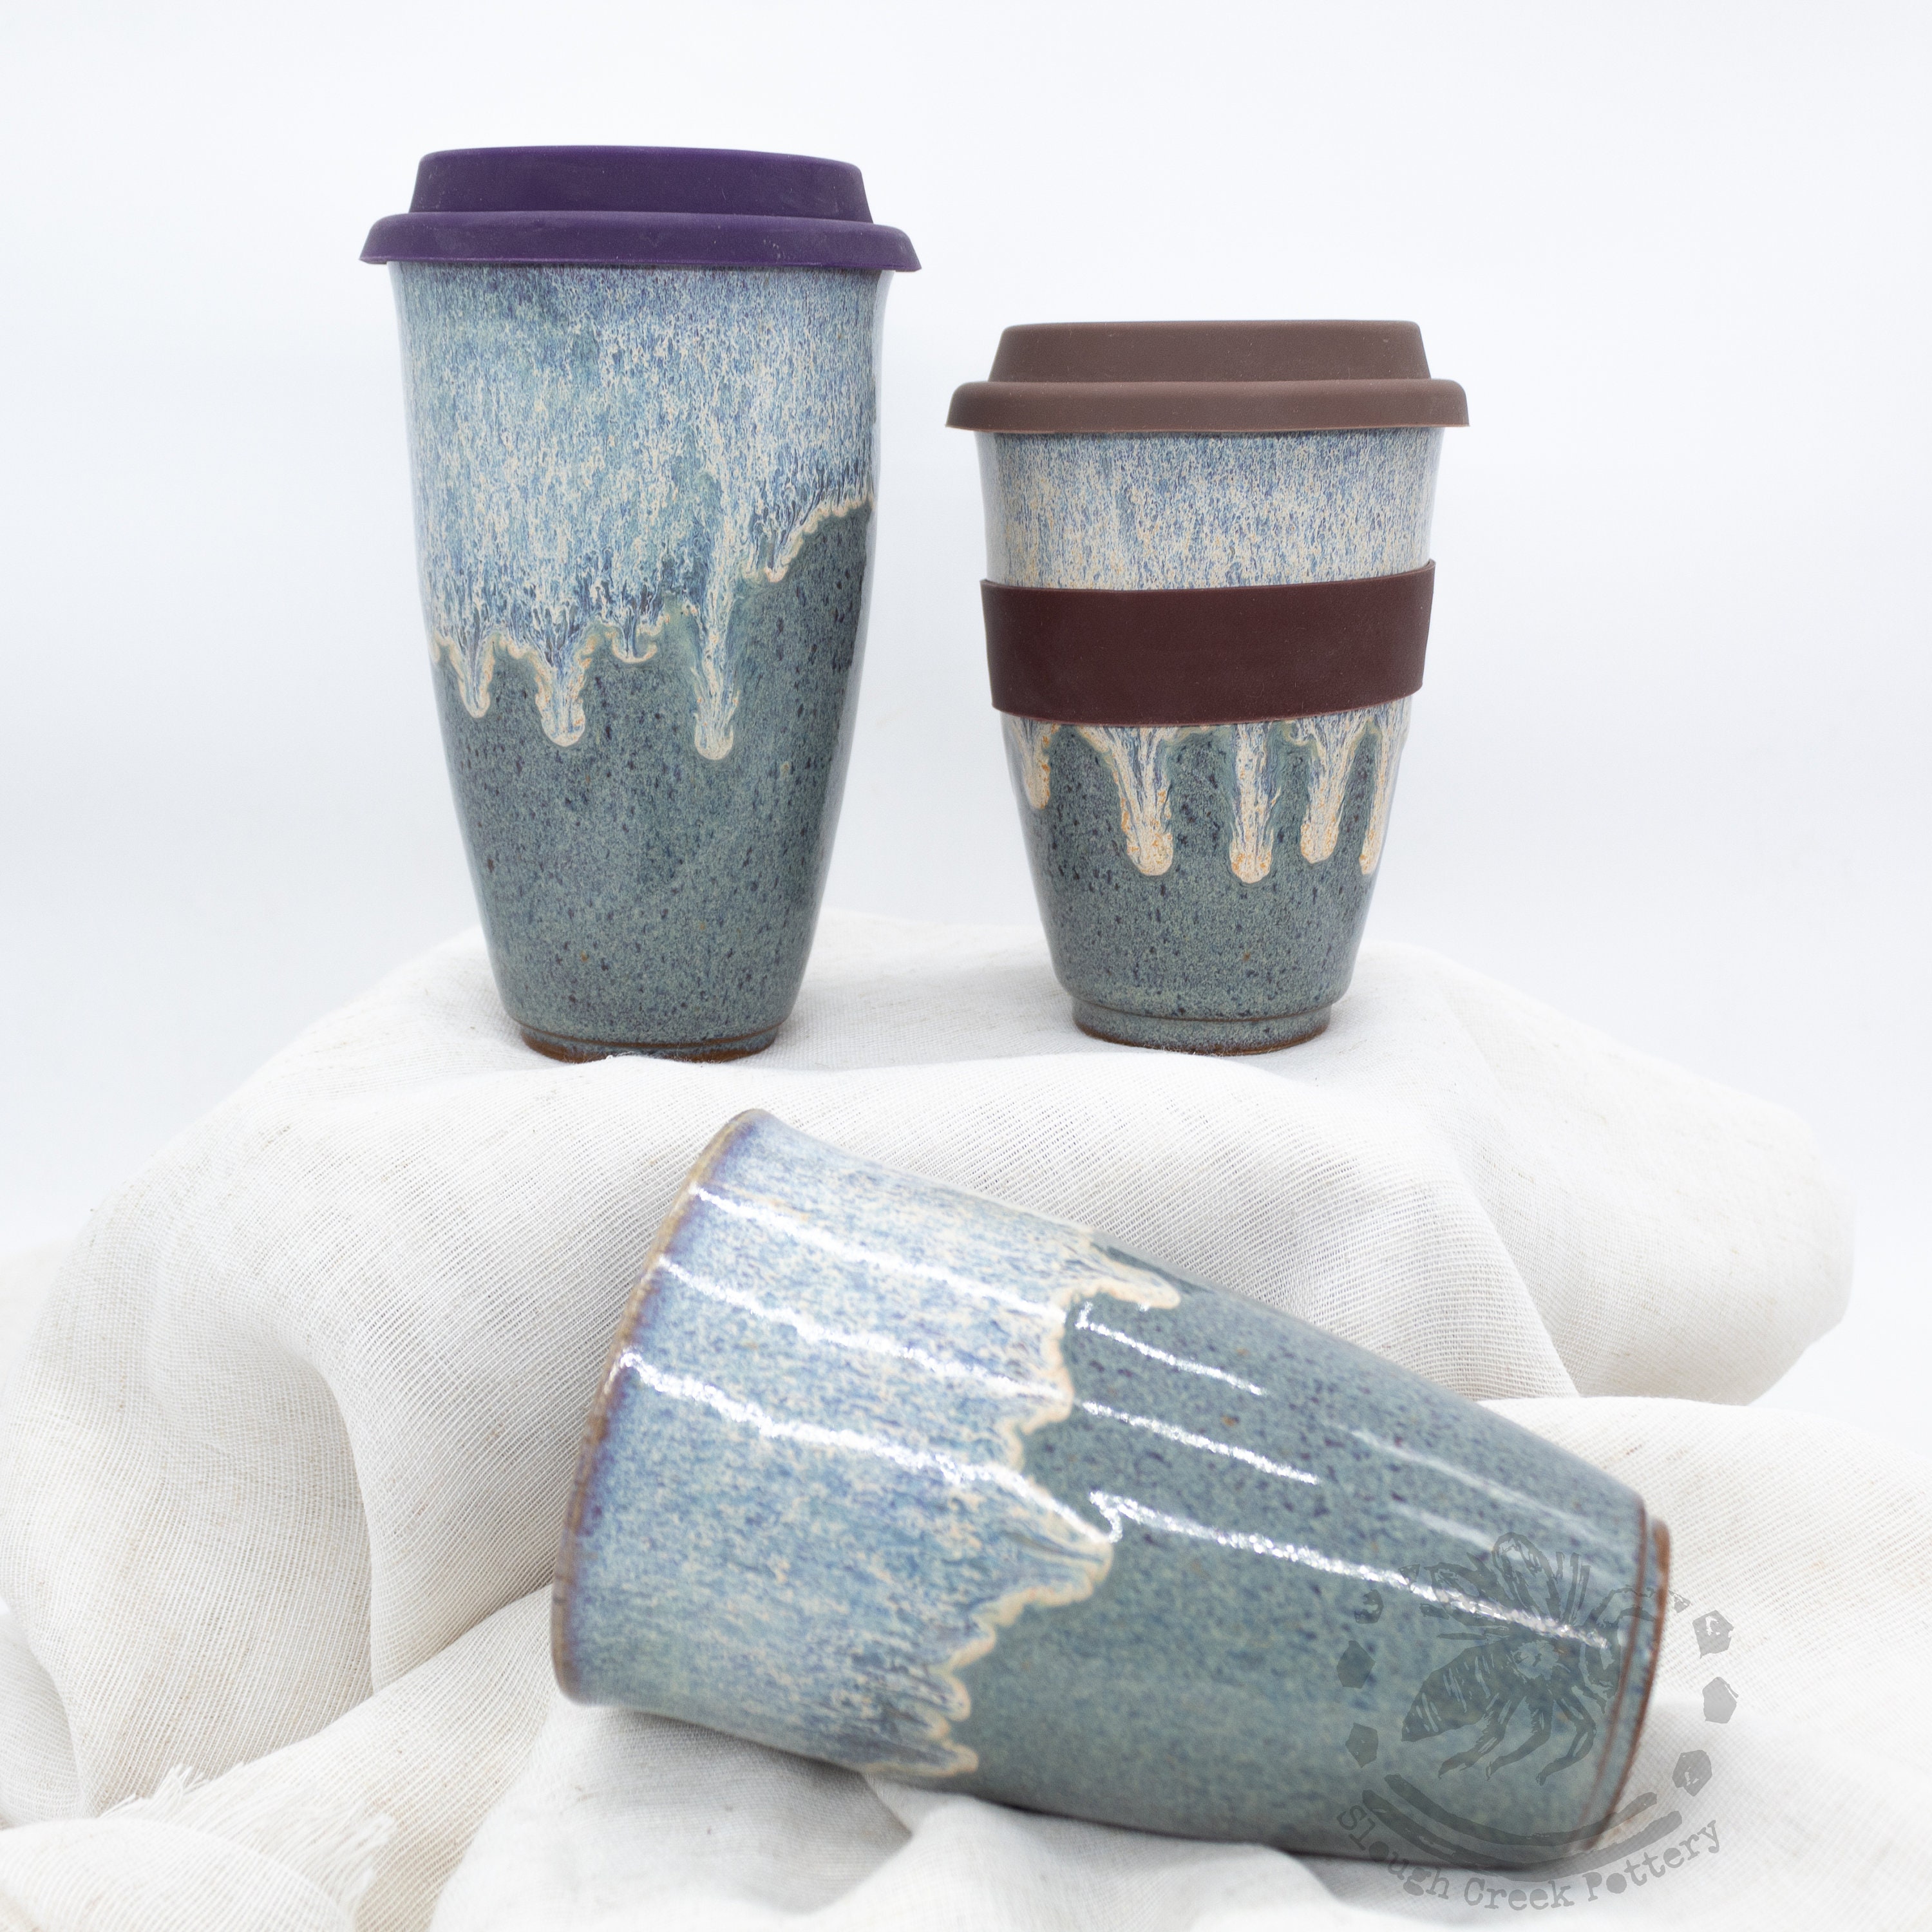 IN STOCK, Small Blue Teal Ceramic Travel Mug With Silicone Lid, Stoneware  to Go Coffee Mug, 14oz Commuter Mug, Handmade Pottery Eco Mug 